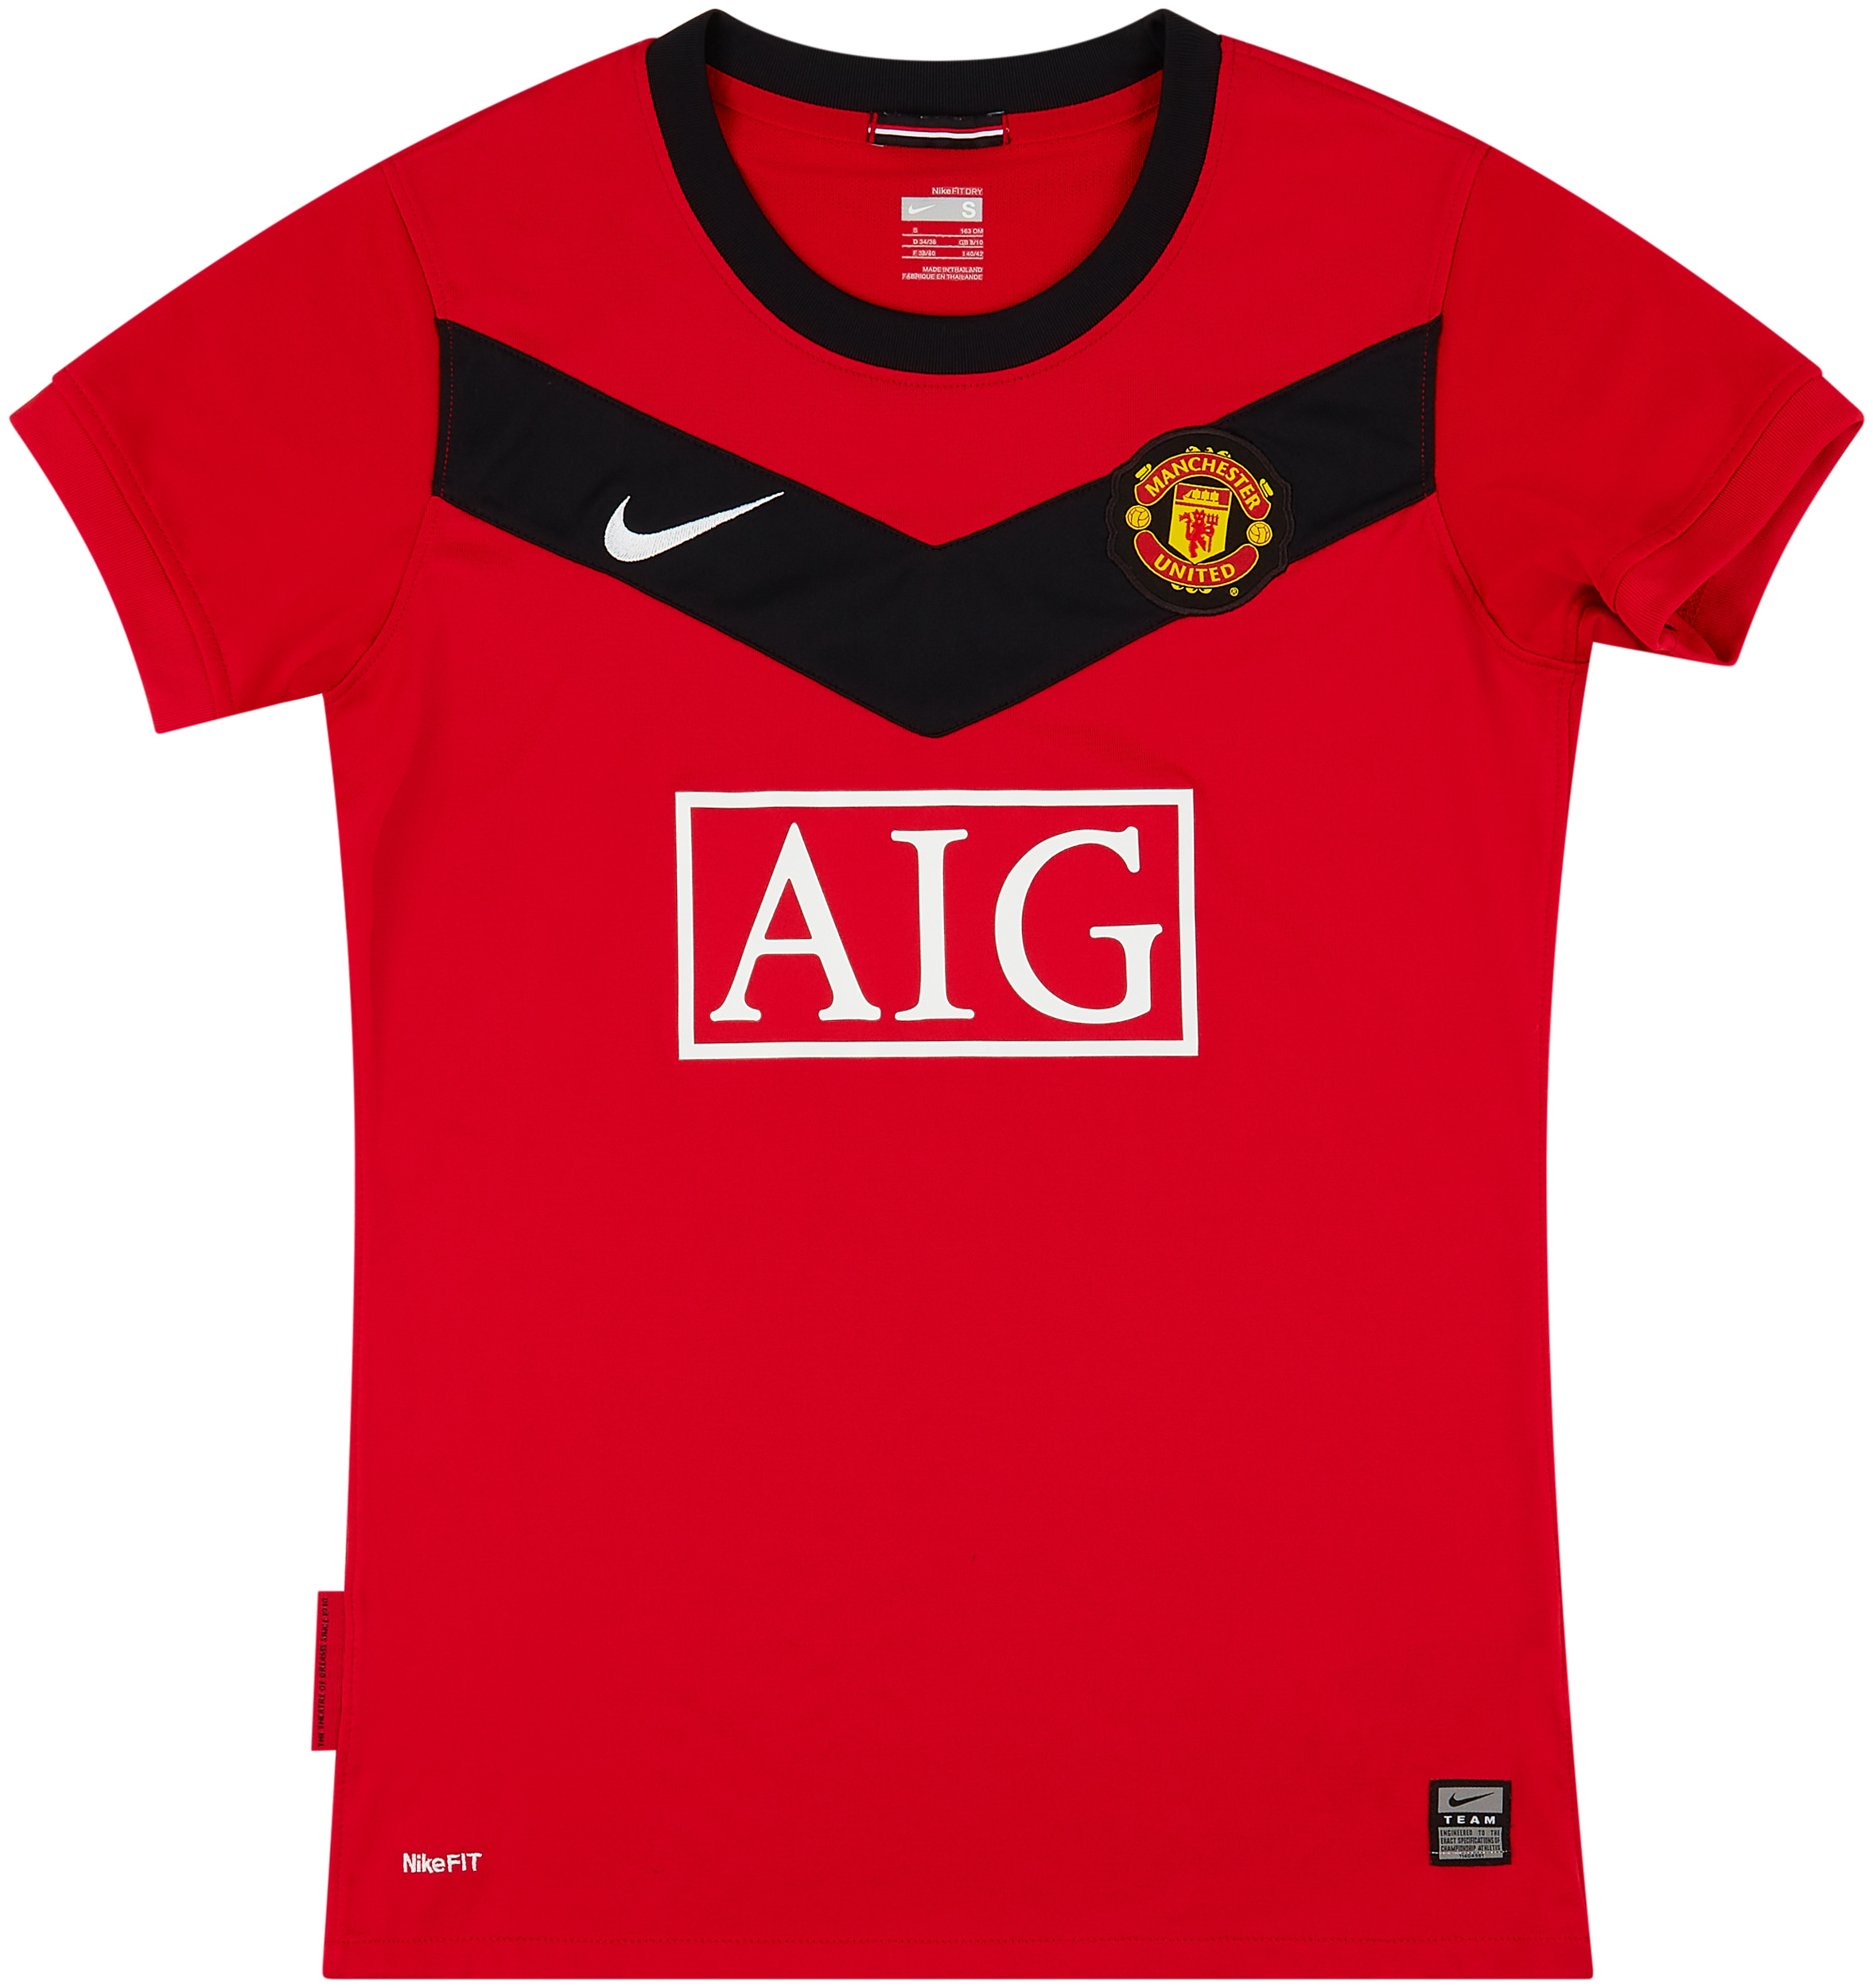 2009-10 Manchester United Home Shirt - 9/10 - (Women's )